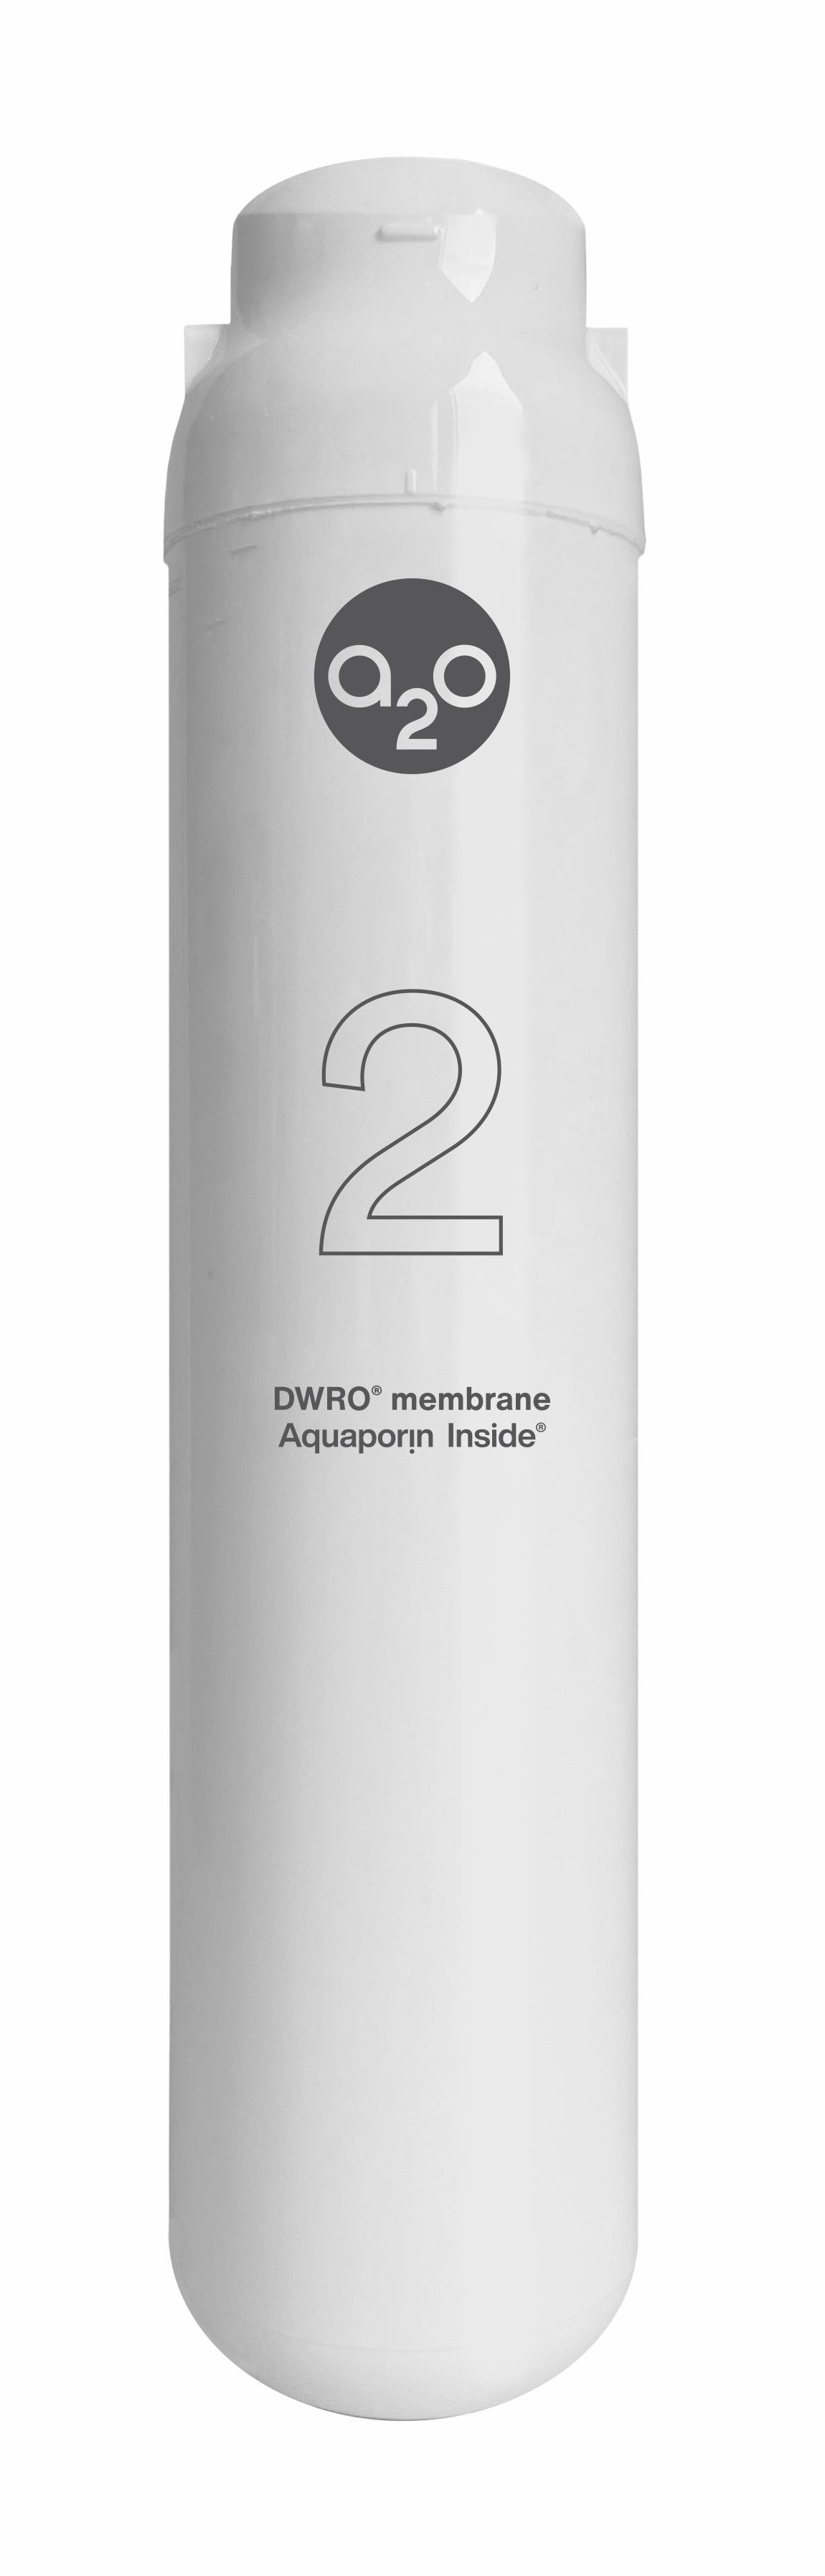 Aquaporin A2O Bar DWRO®-membran